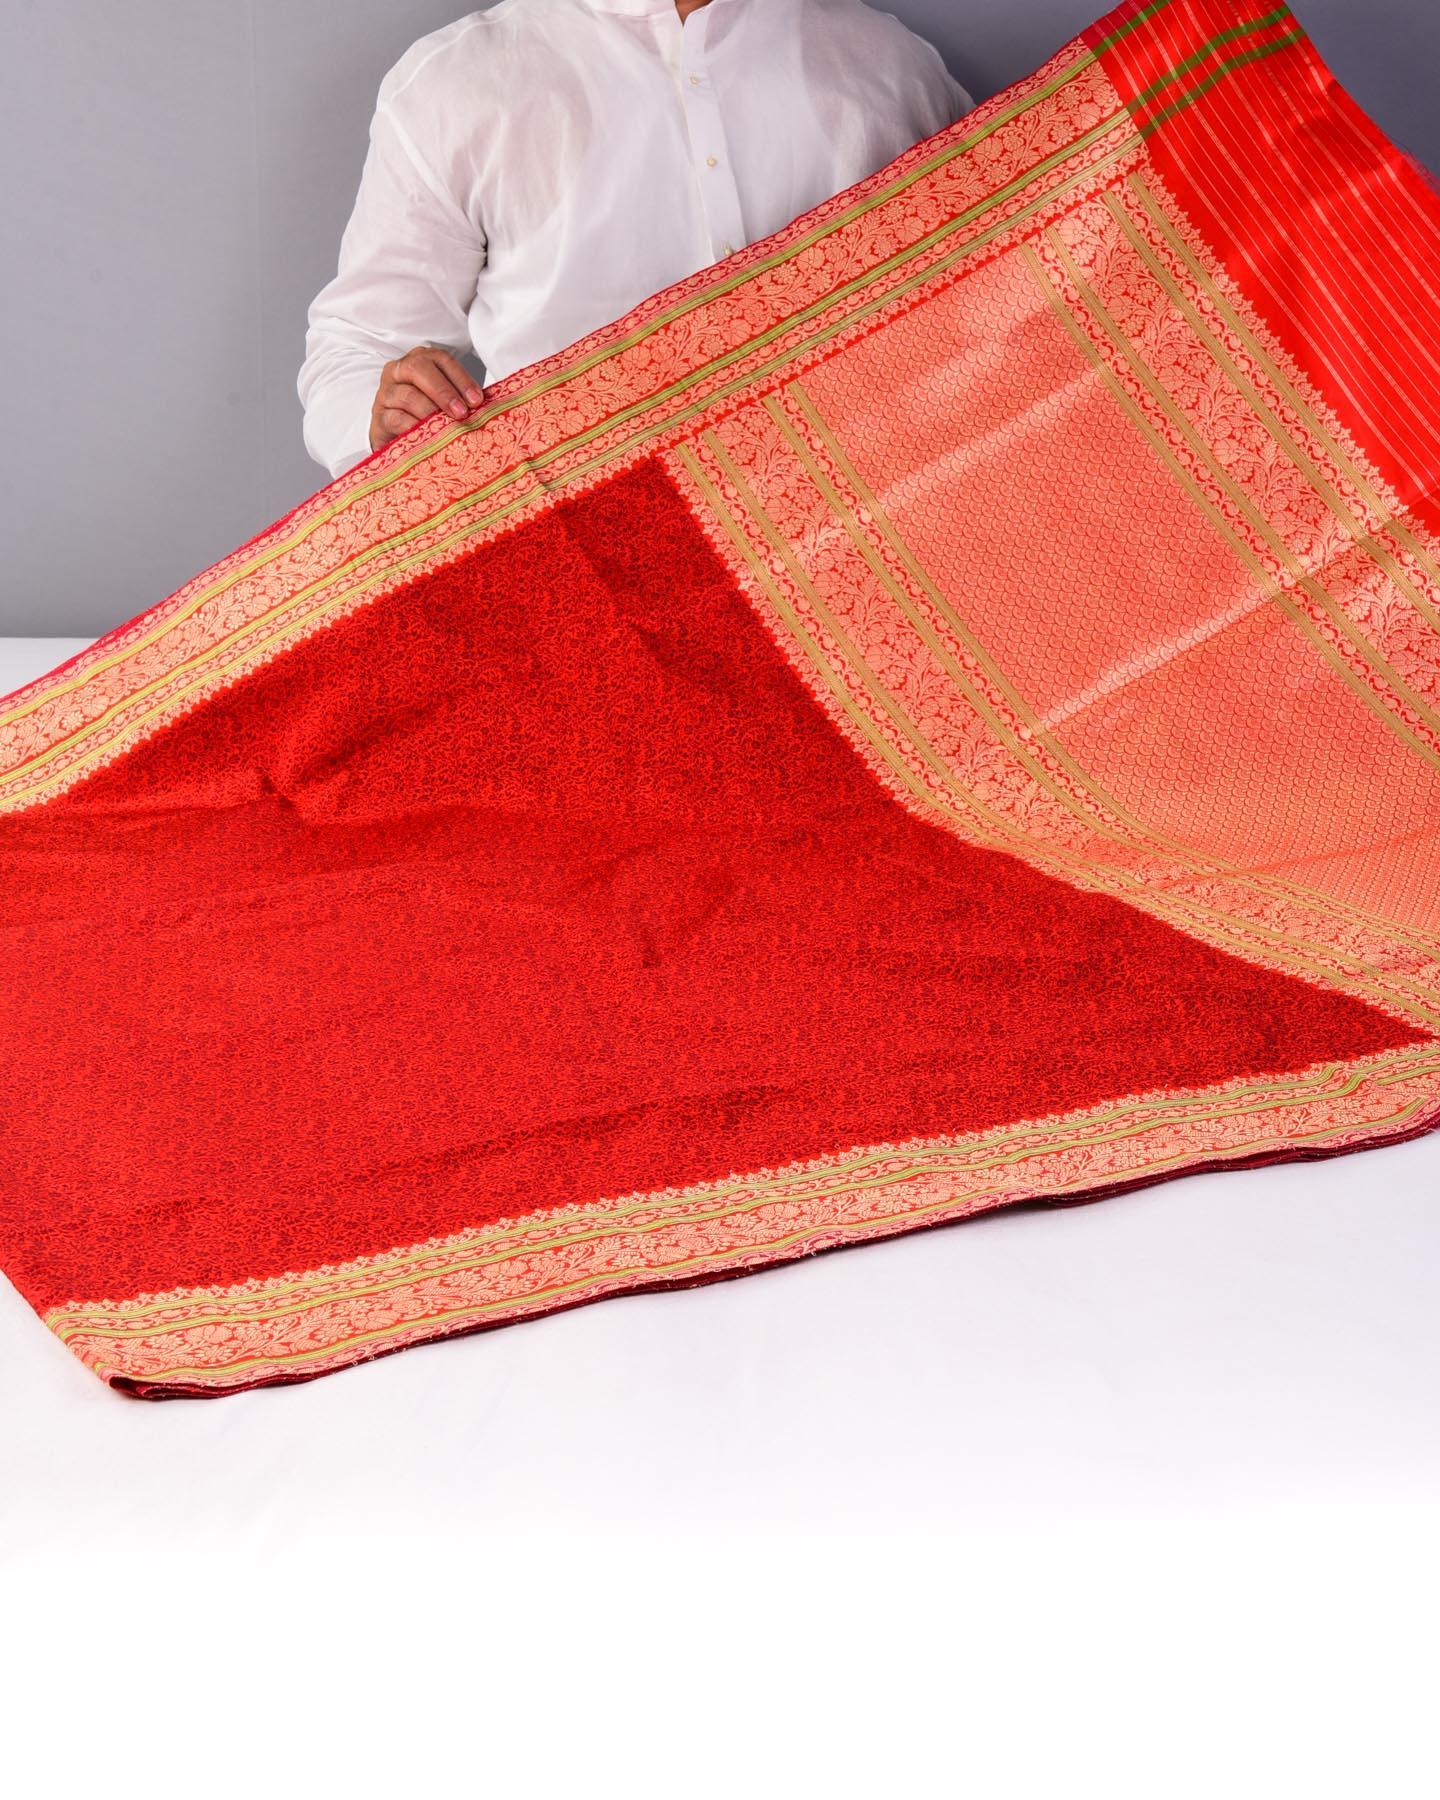 Maroon On Red Banarasi Tanchoi Brocade Handwoven Katan Silk Saree - By HolyWeaves, Benares